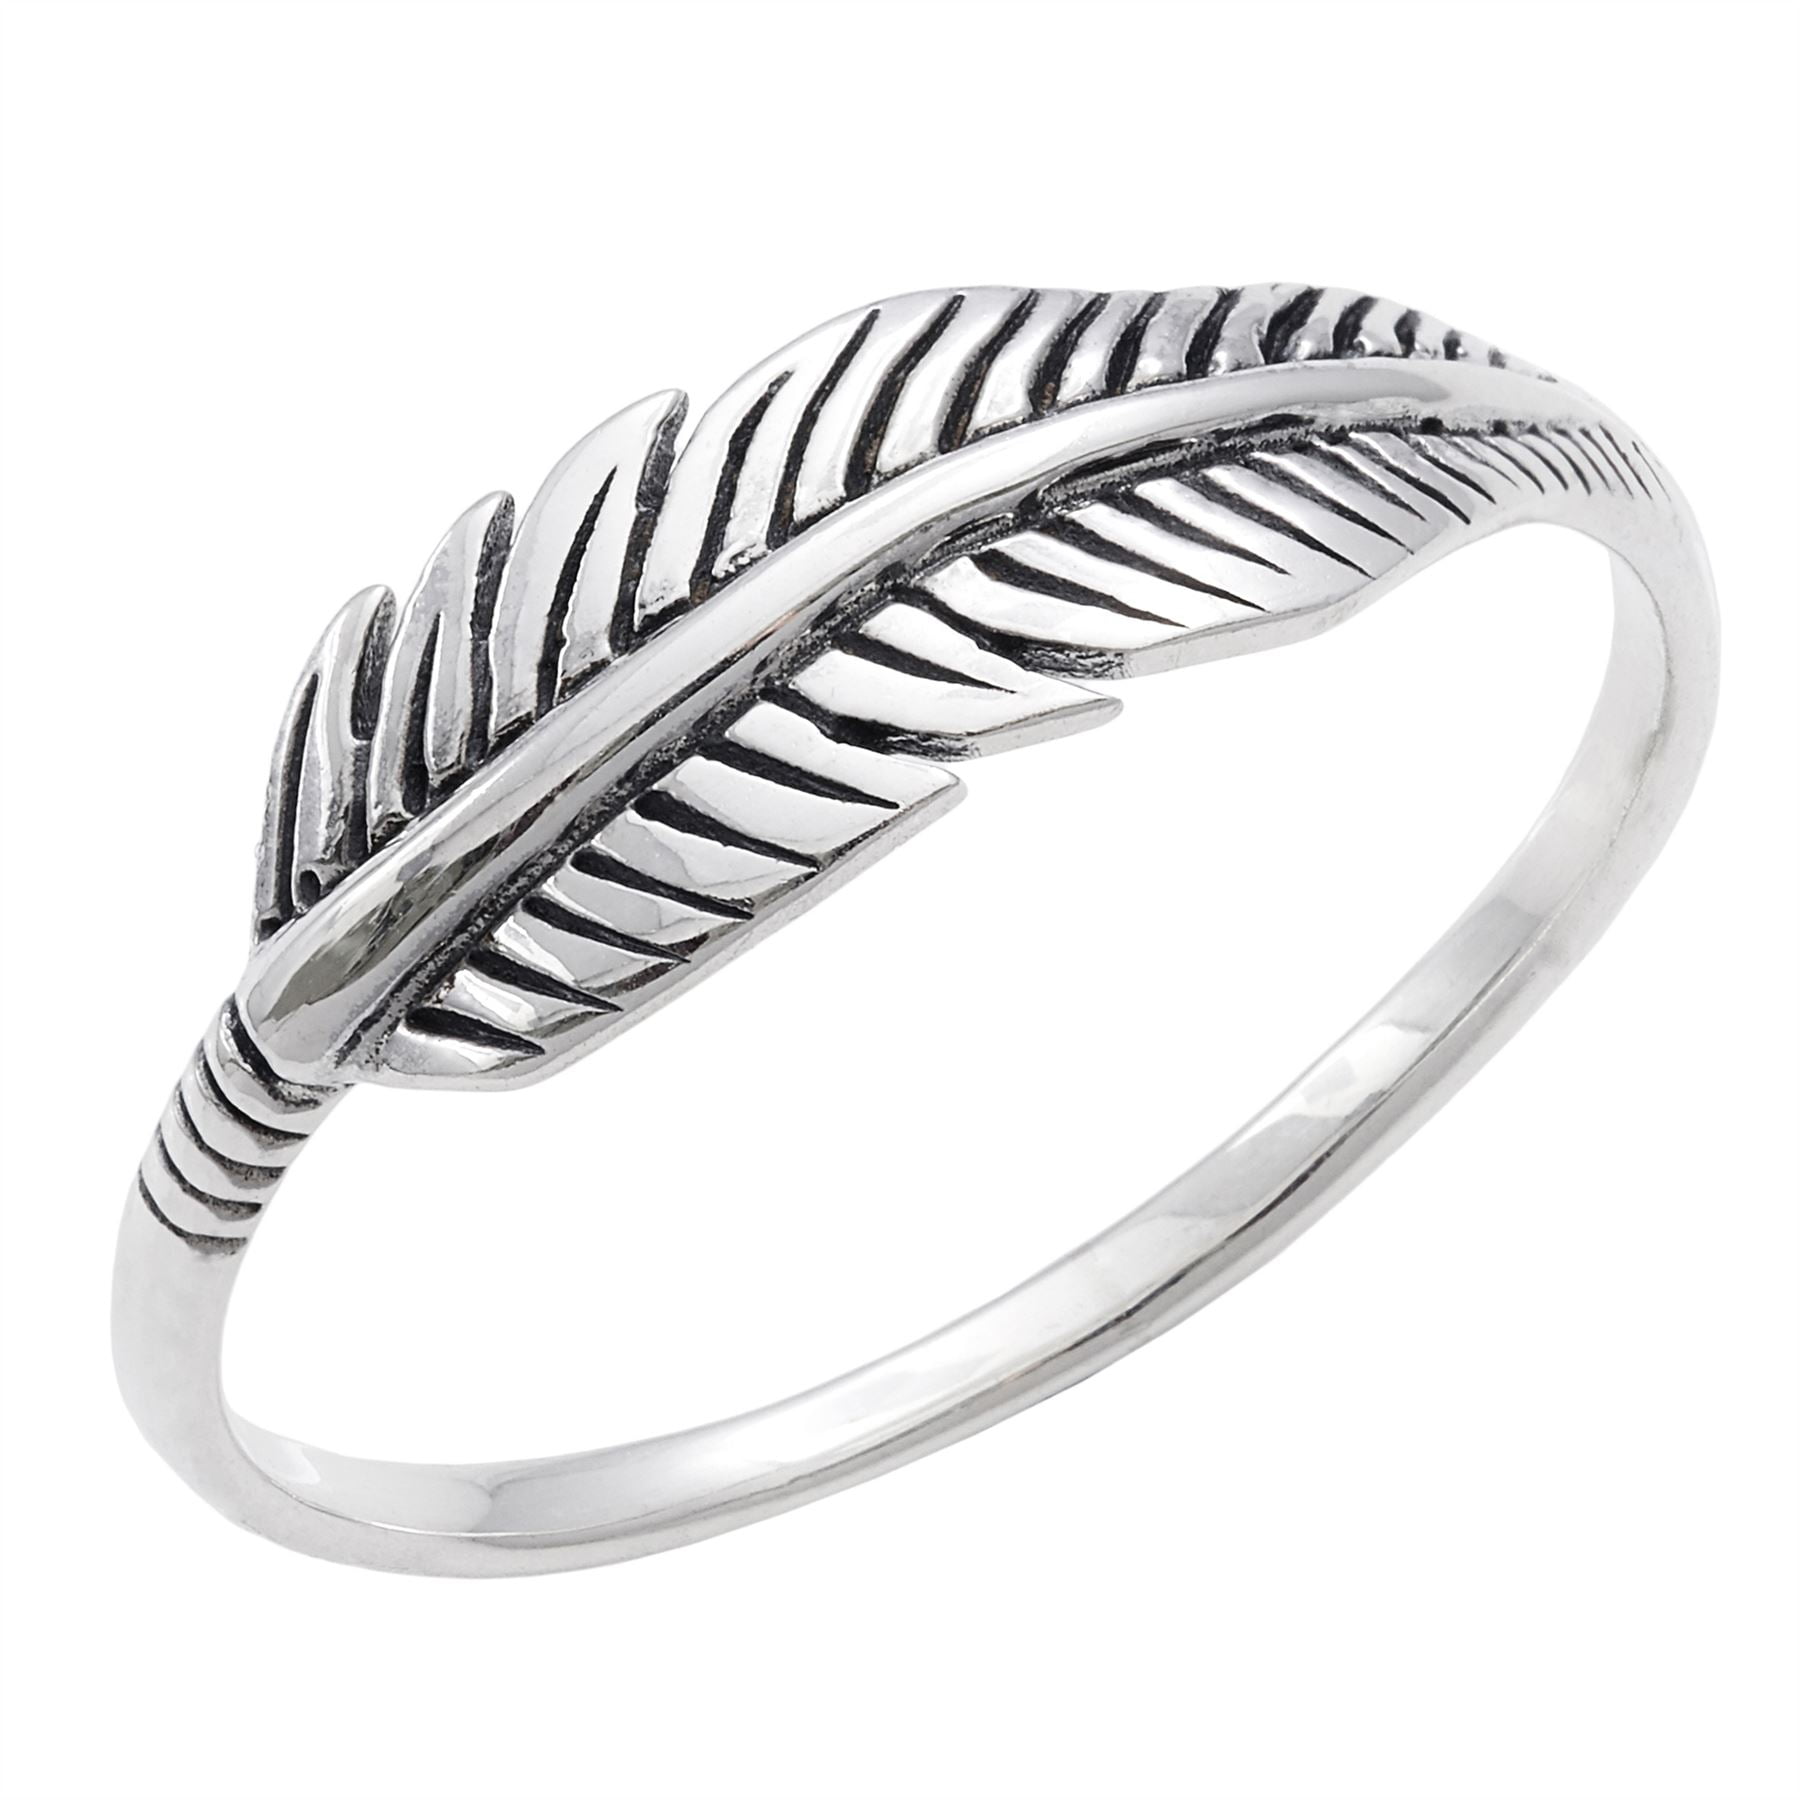 Buy Teejh Ethnic Tribal Silver Oxidised Ring Online for Women